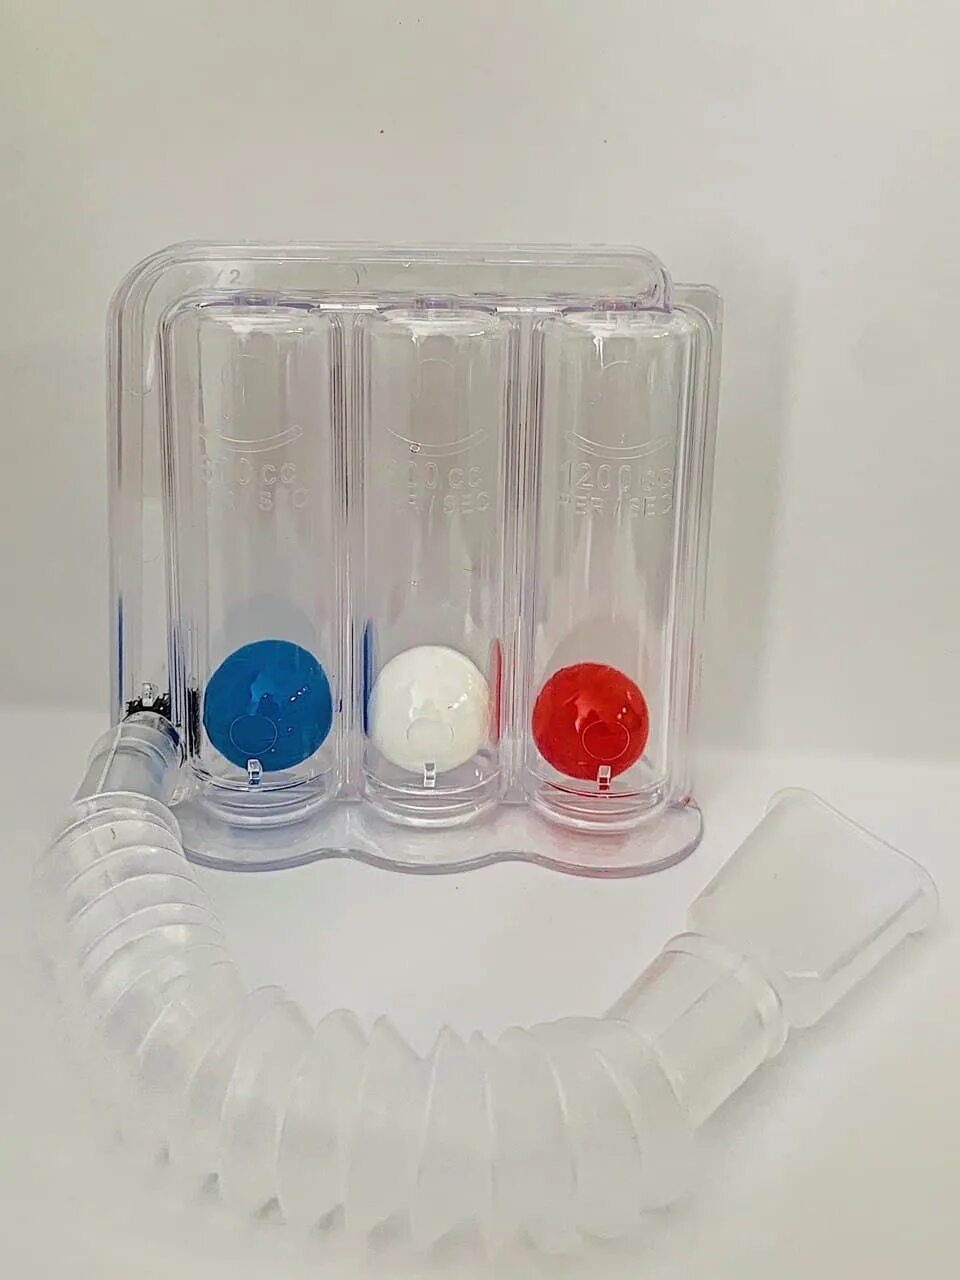 Тренажер дыхательный Plasti-med 180101. Threshold IMT дыхательный тренажер. Дыхательный тренажер Plasti-med потоковый. Дыхательный тренажер respiro. Дыхательный тренажер threshold pep